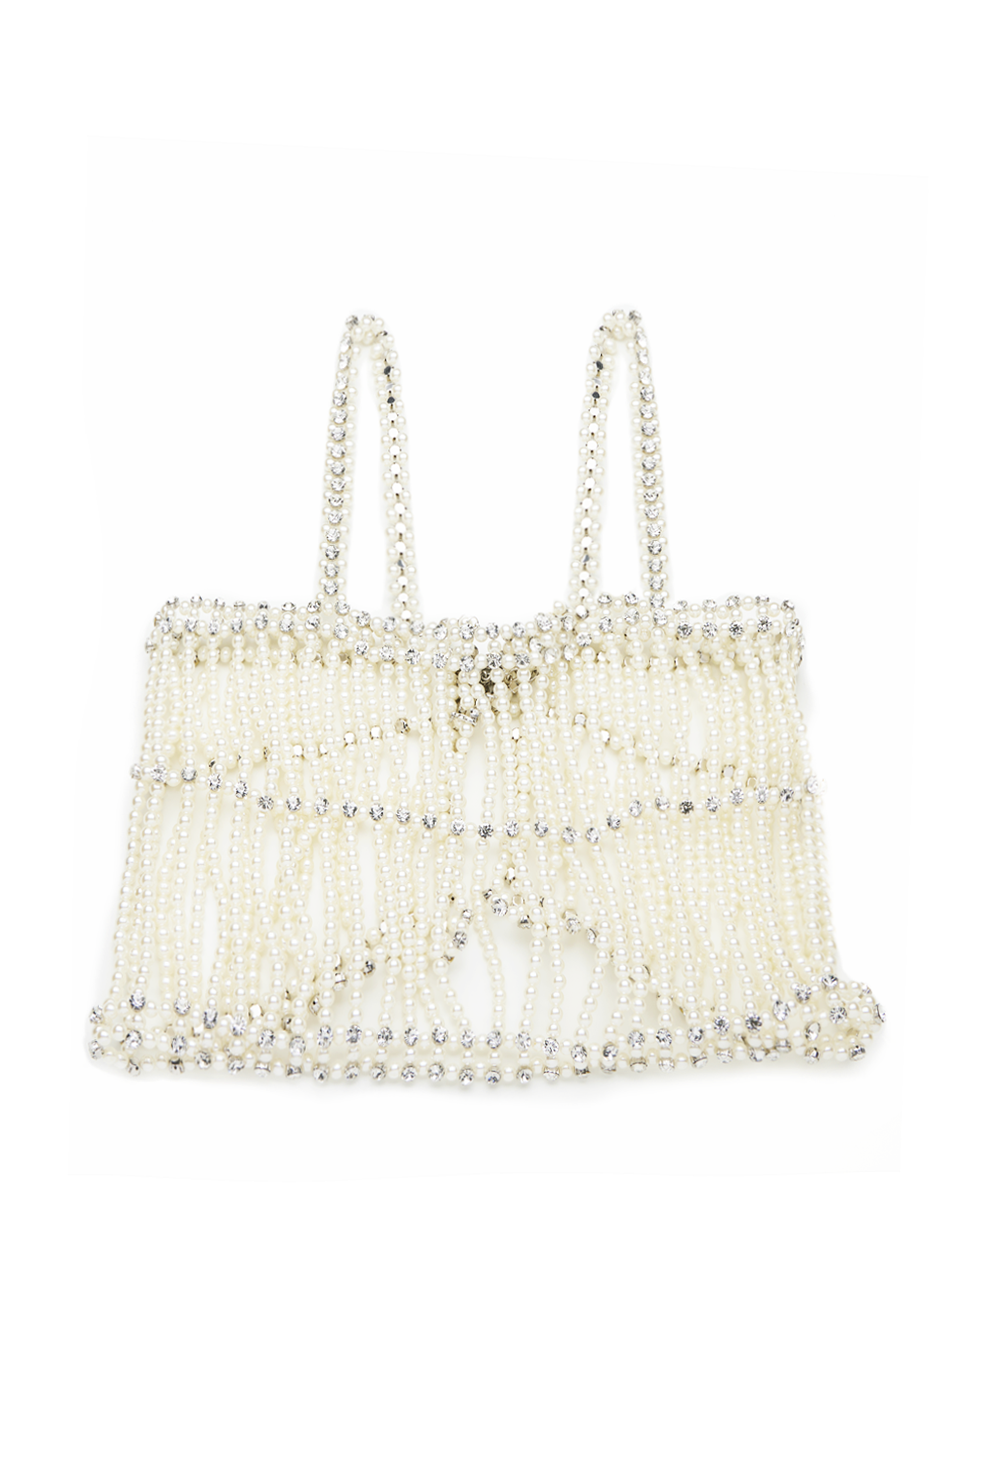 Vintage Retro Marilyn Monroe Purse Handbag Jeweled Great Condition